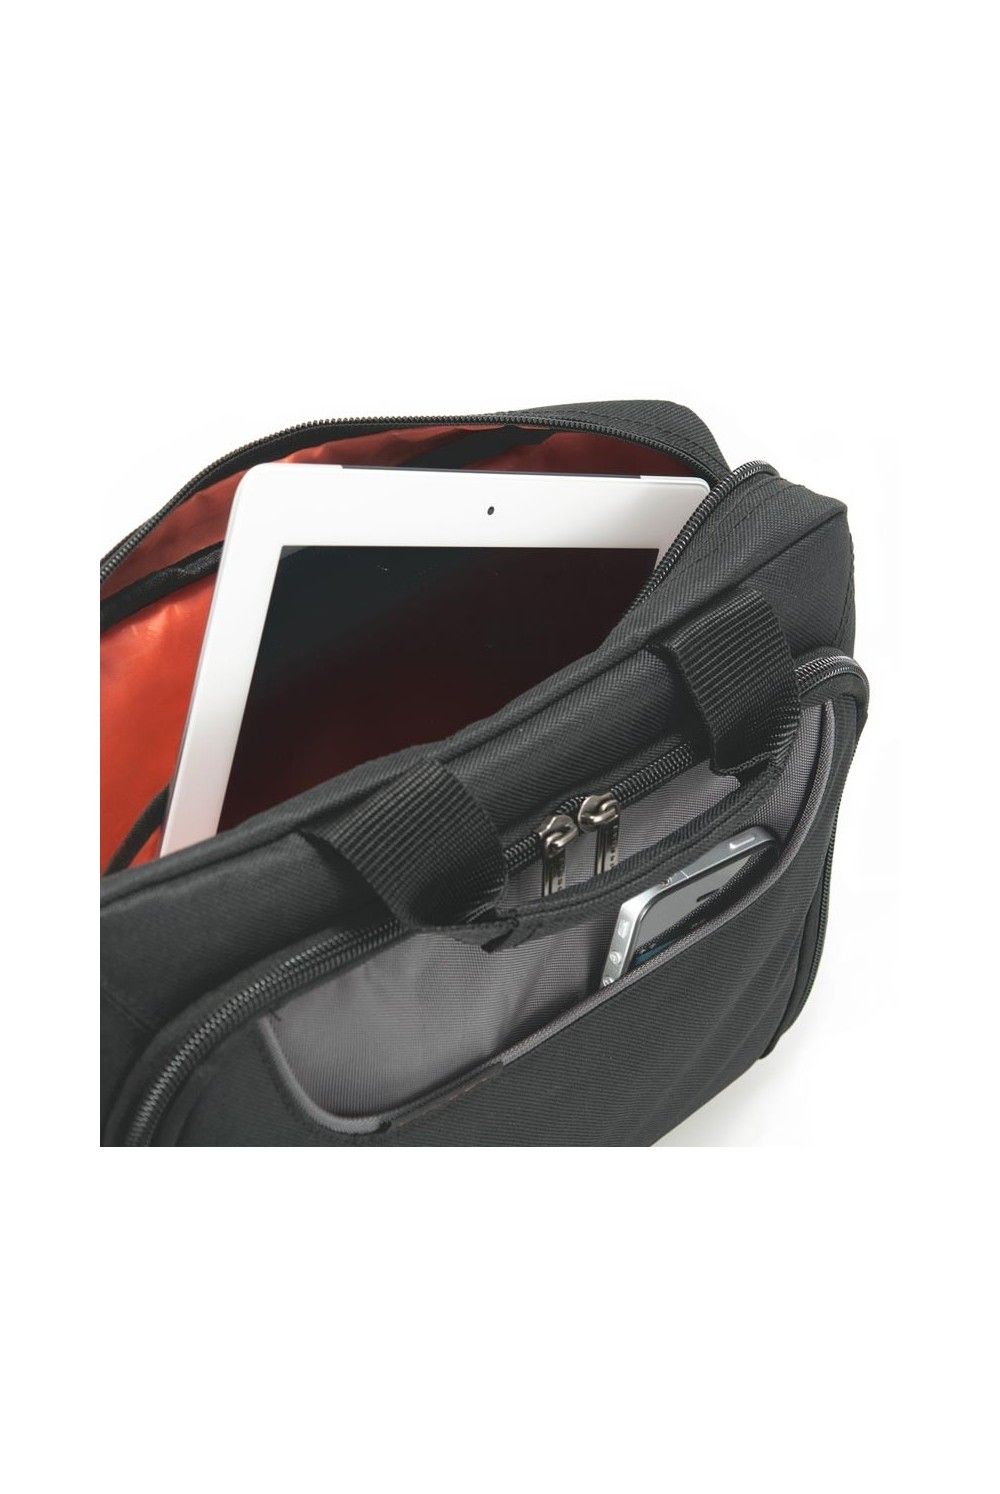 Tablet Bag Advance Everki 11.6 inches